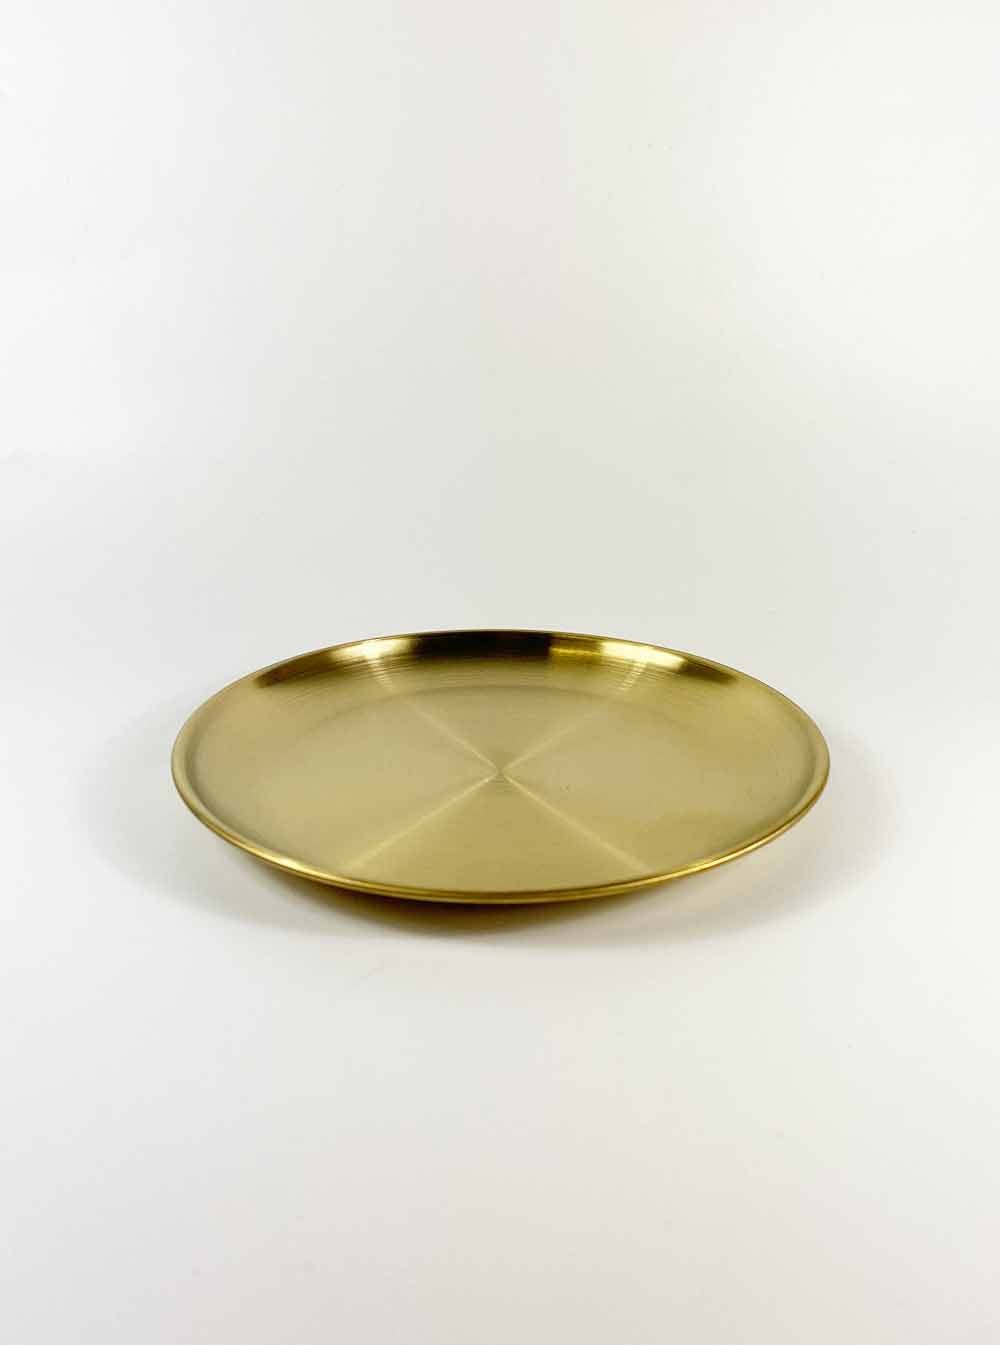 Gold-plated Minimalist Smoke Offering Burner Plate